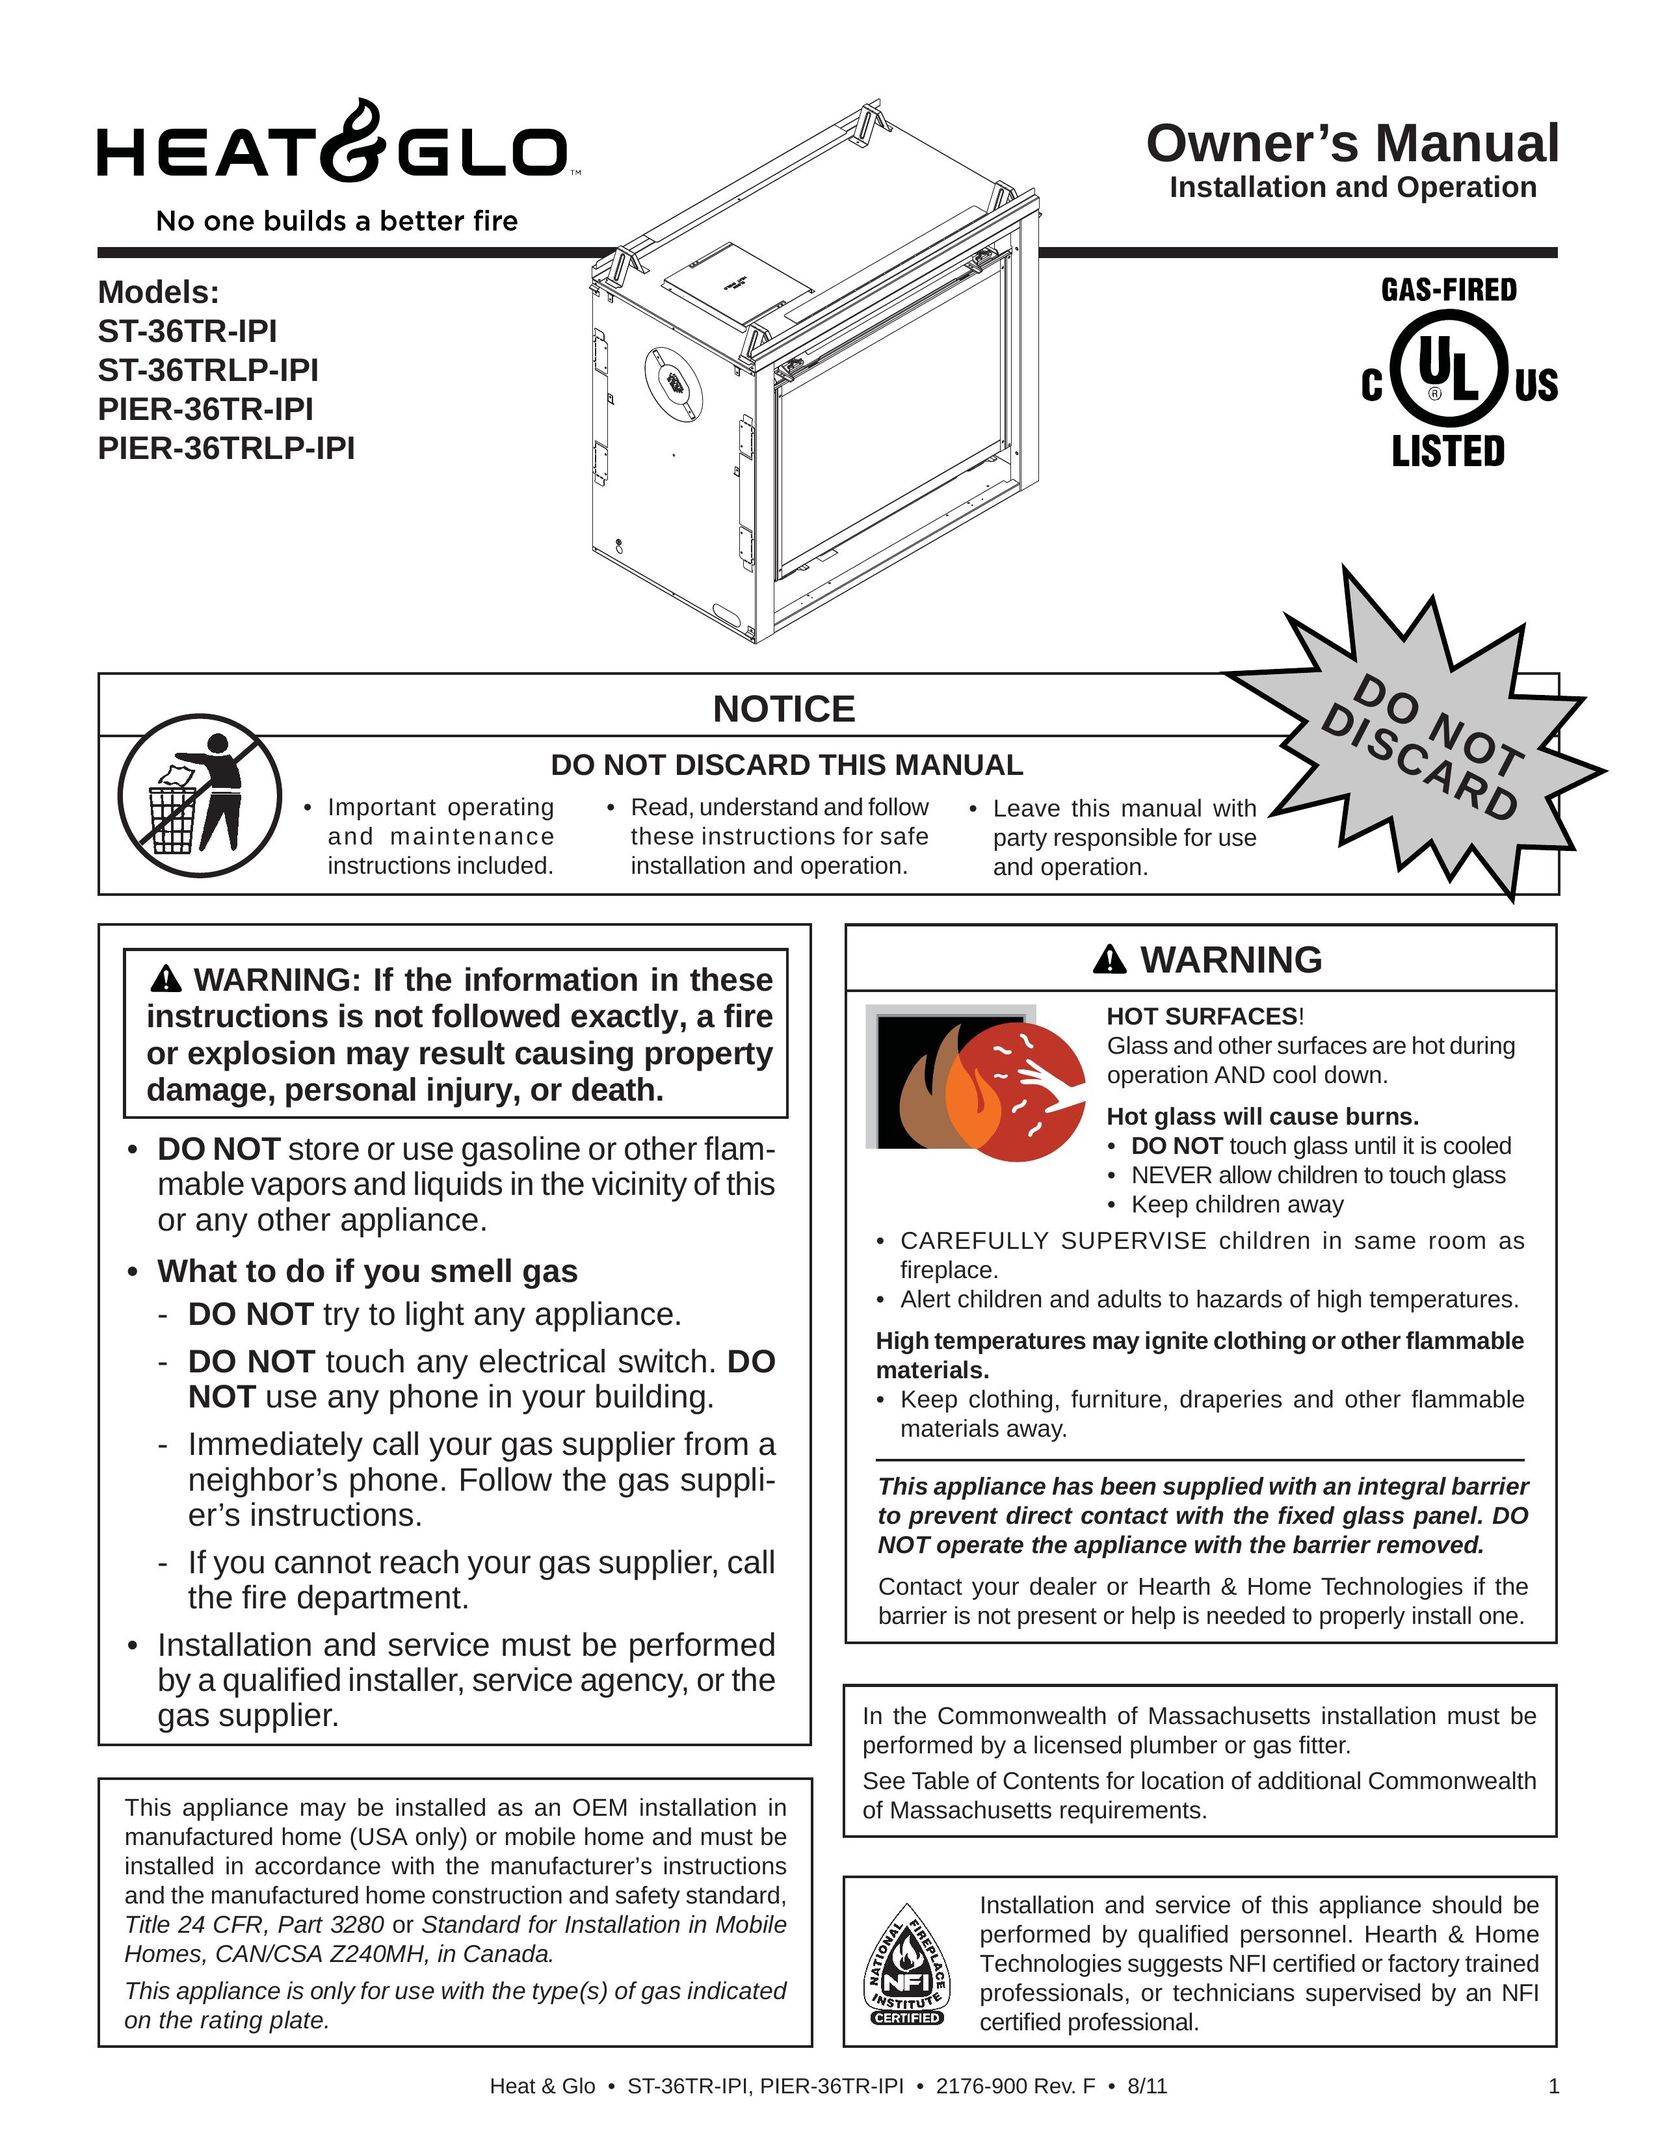 Heat & Glo LifeStyle PIER-36TRLP-IPI Burner User Manual